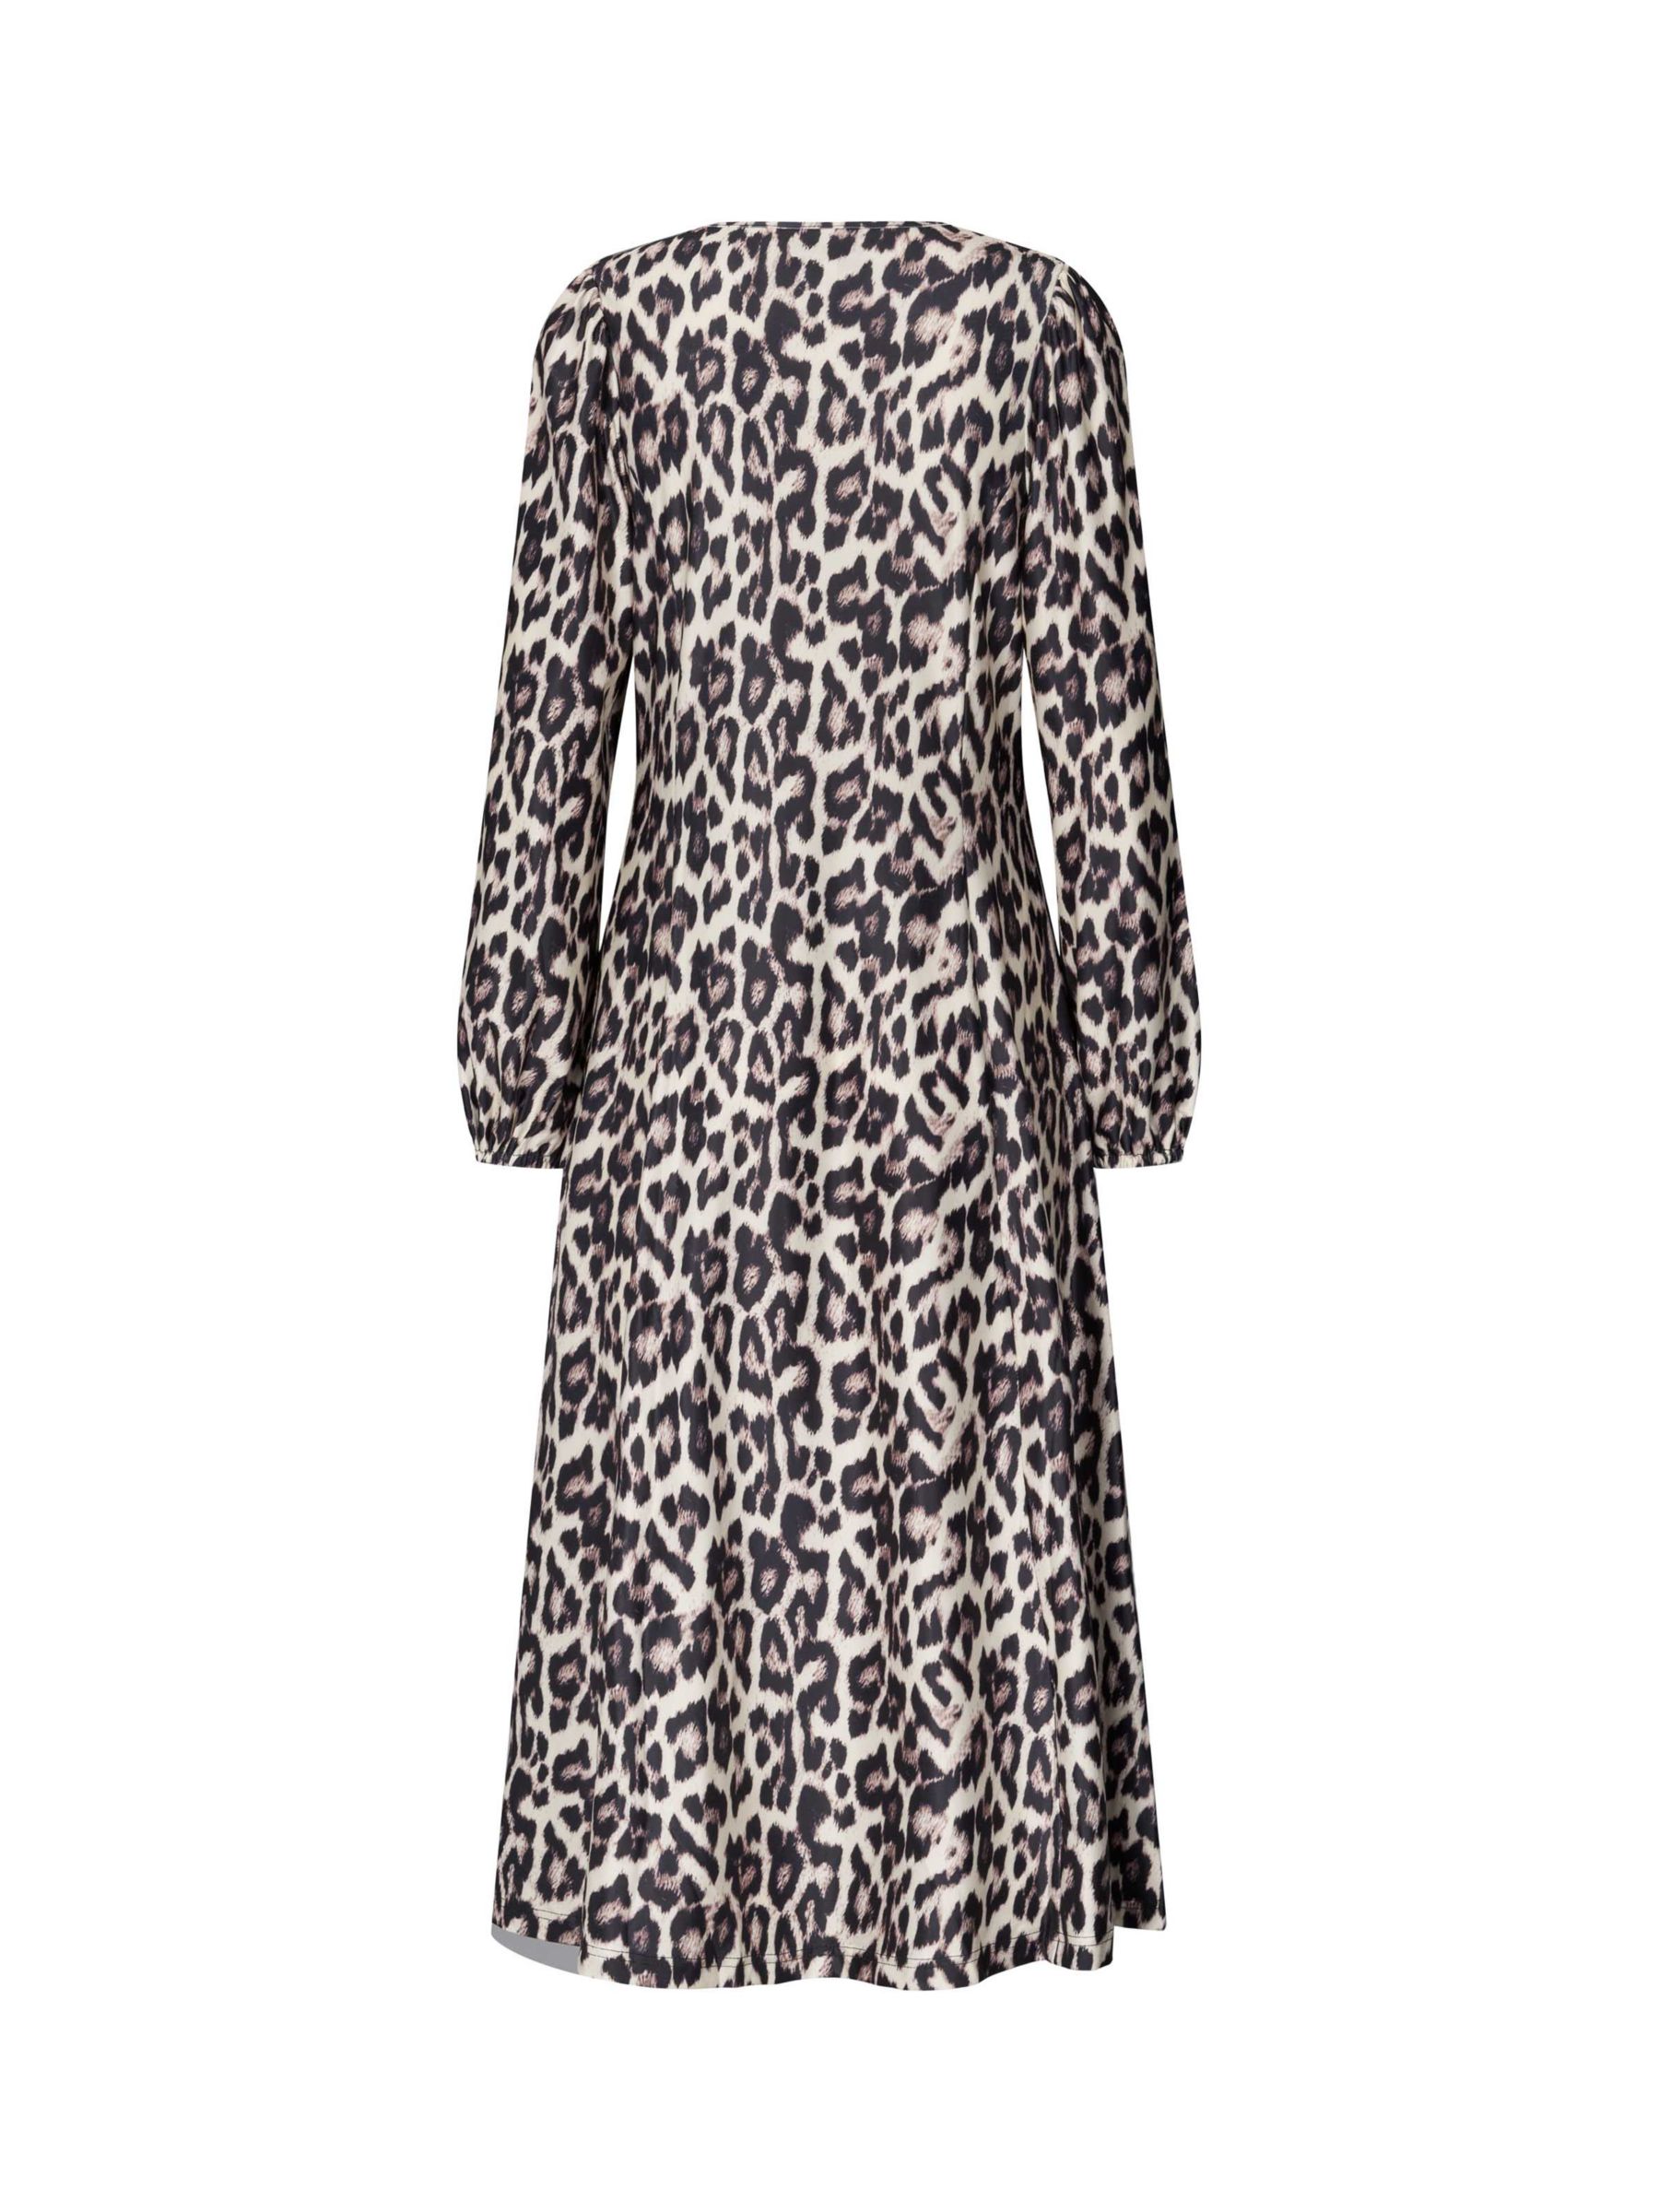 Lollys Laundry Lake Leopard Print Midi Dress, Brown/Multi, XS